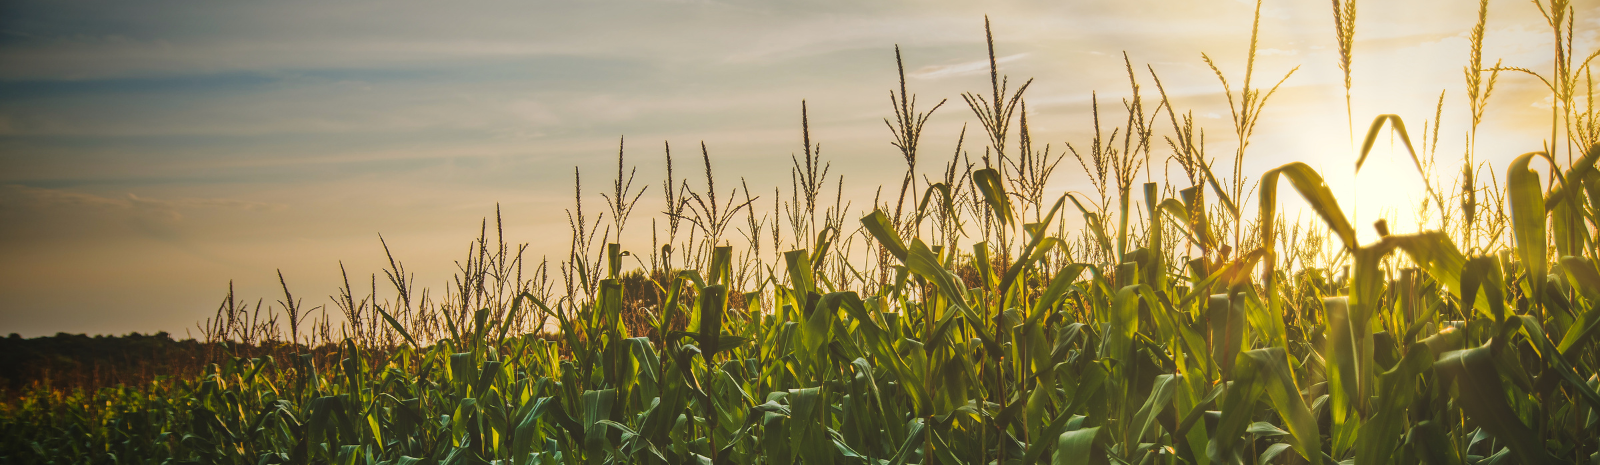 agriculture loan - corn field